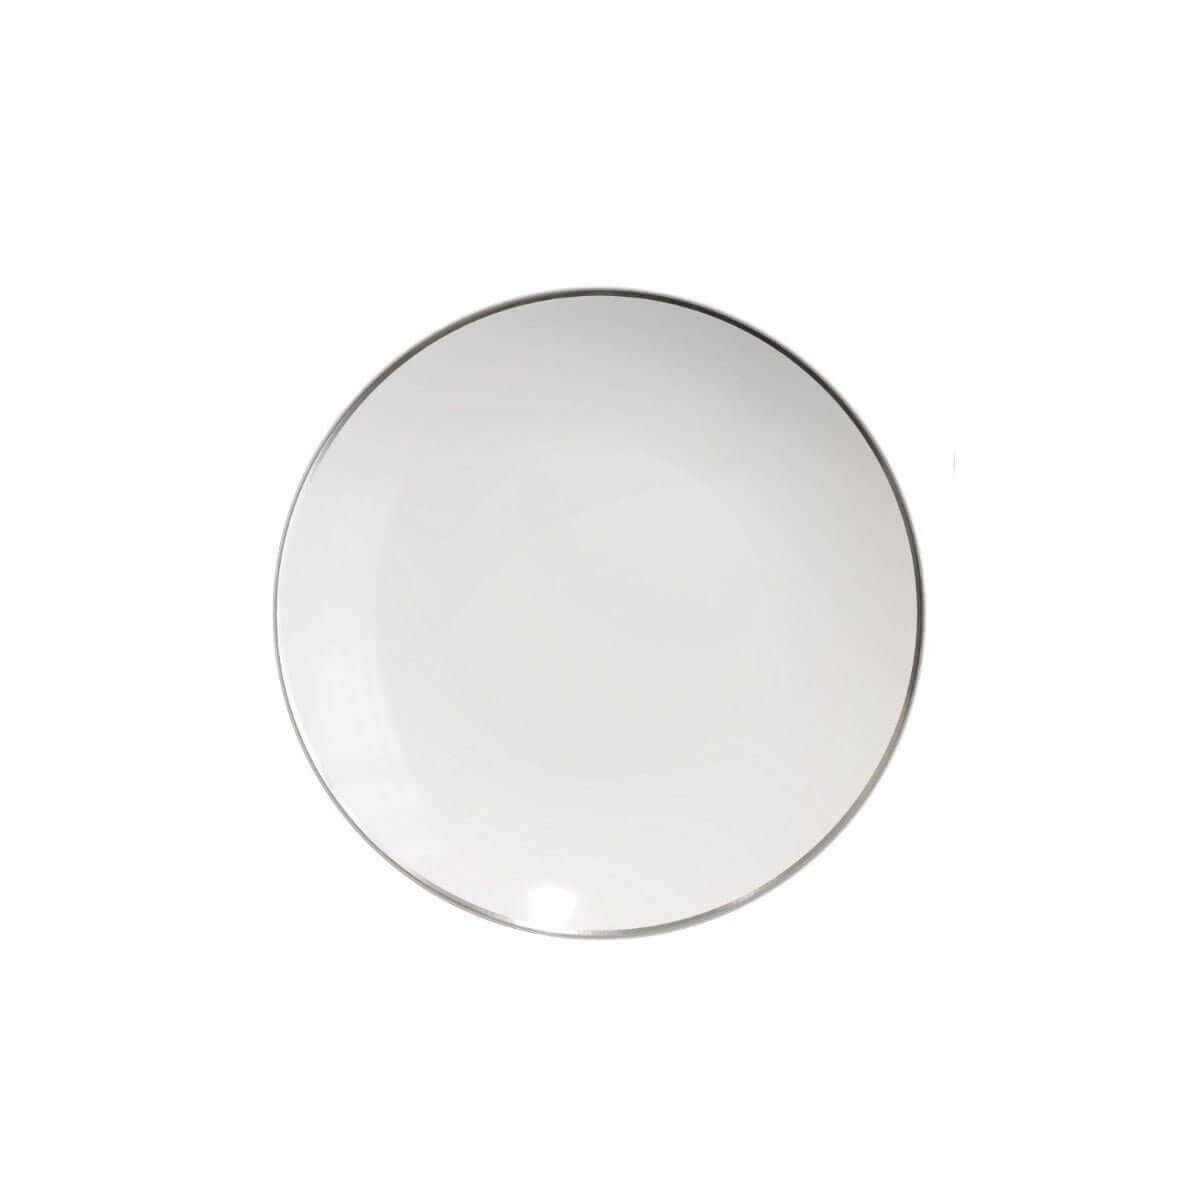 6" Classic Silver Design Plastic Plates (120 Count) - Yom Tov Settings